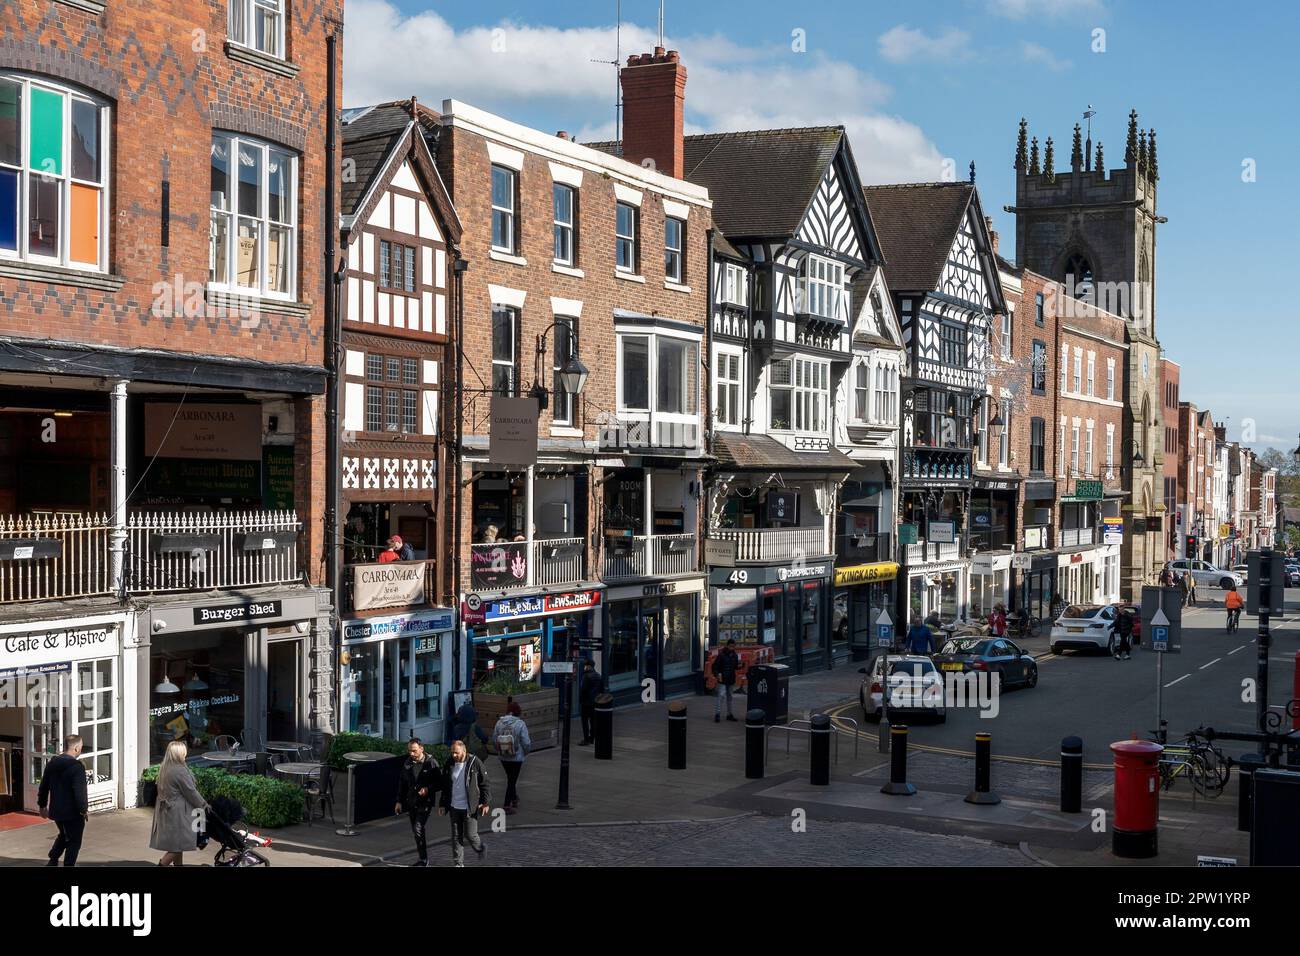 Vari stili architettonici su Bridge Street Chester UK Foto Stock